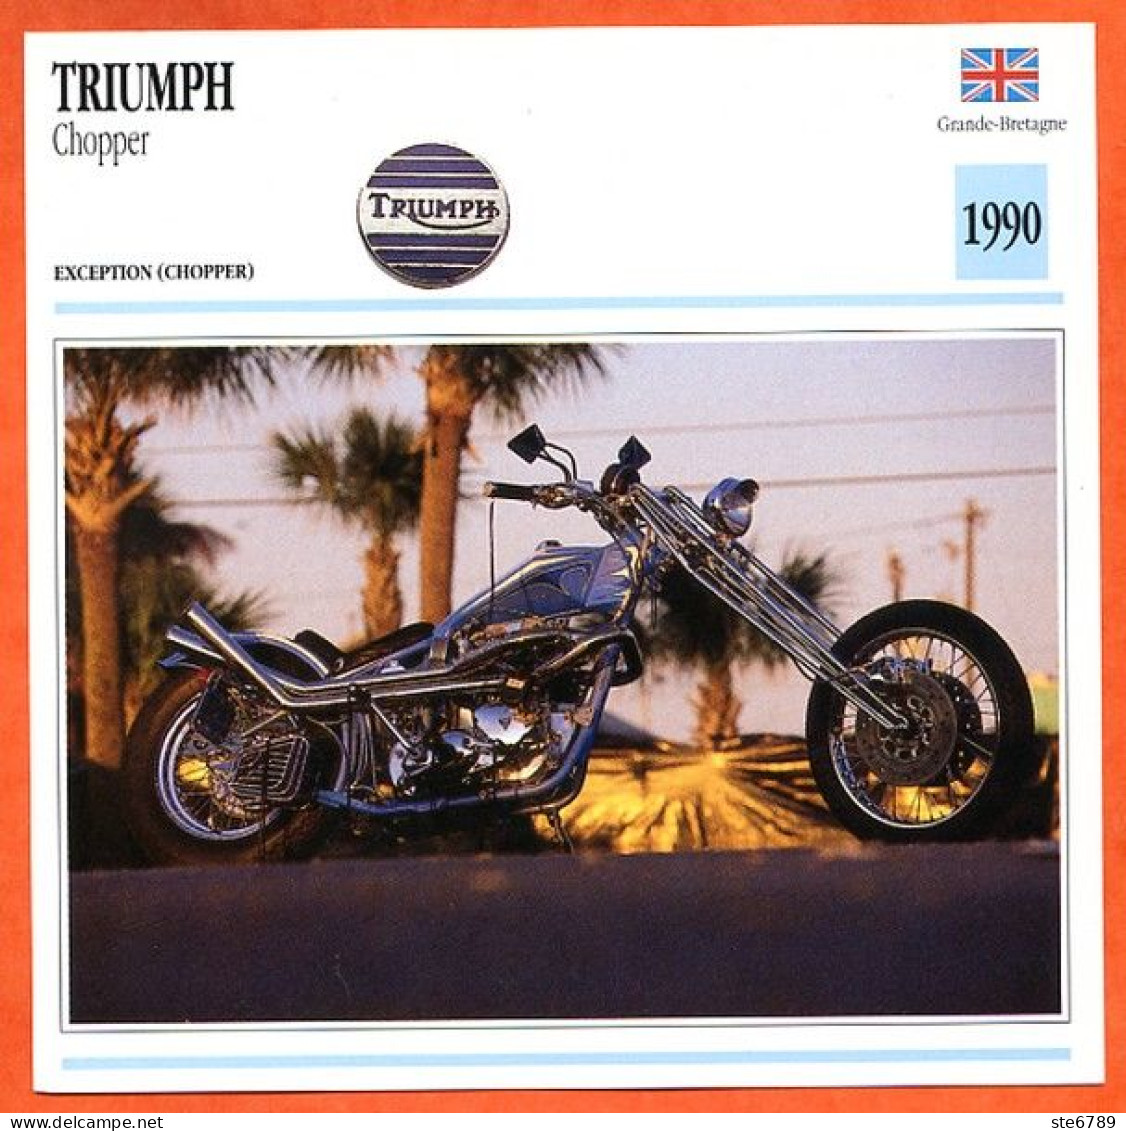 TRIUMPH Chopper 1990 UK Fiche Technique Moto - Sports